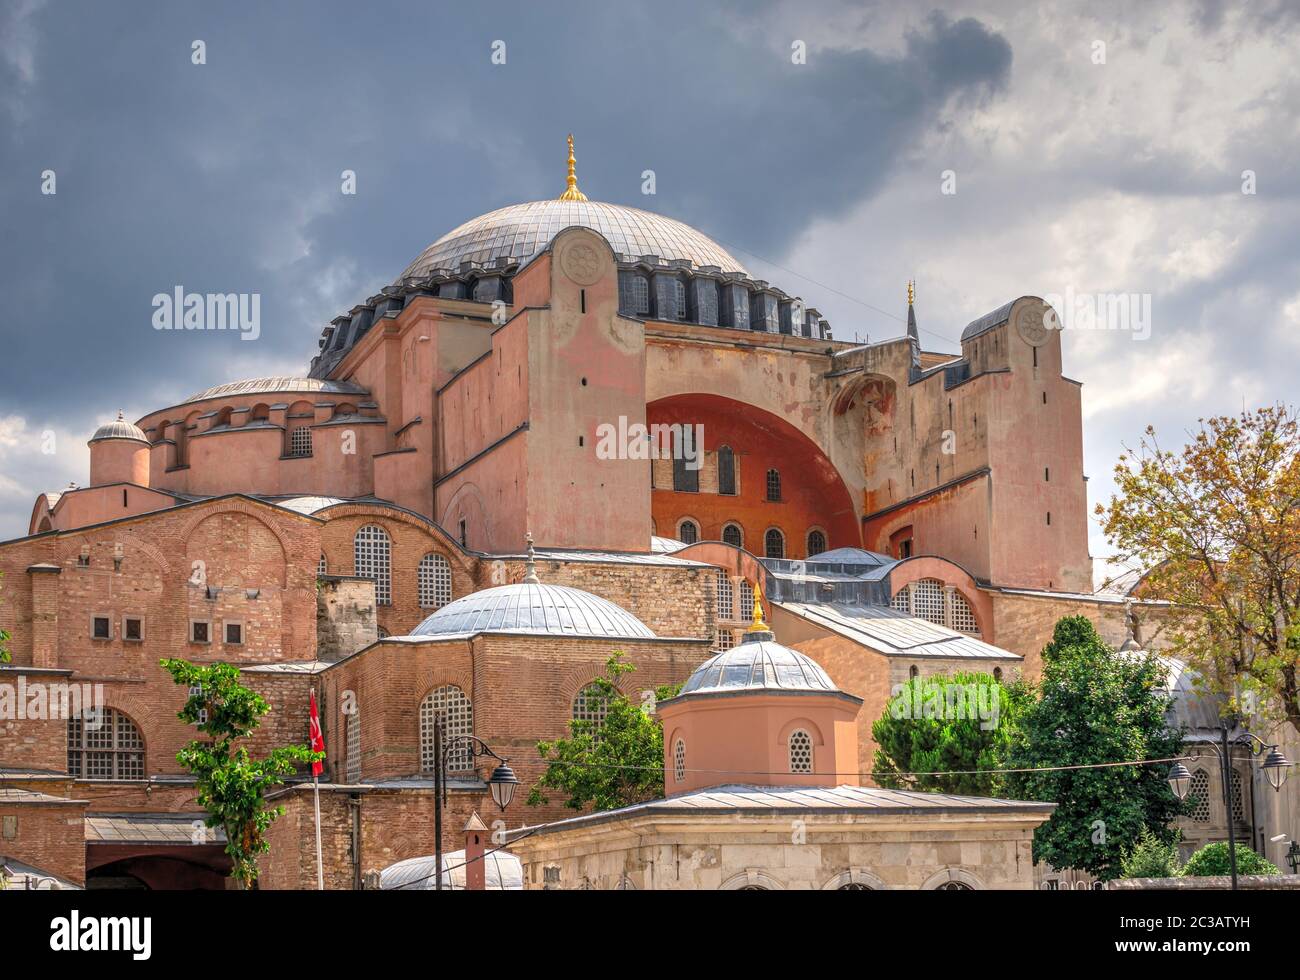 Istamul, Türkei - 07.12.2019. Hagia Sophia Museum im Sultan-Ahmed-Park, Istanbul, Türkei, an einem trüben Sommertag Stockfoto